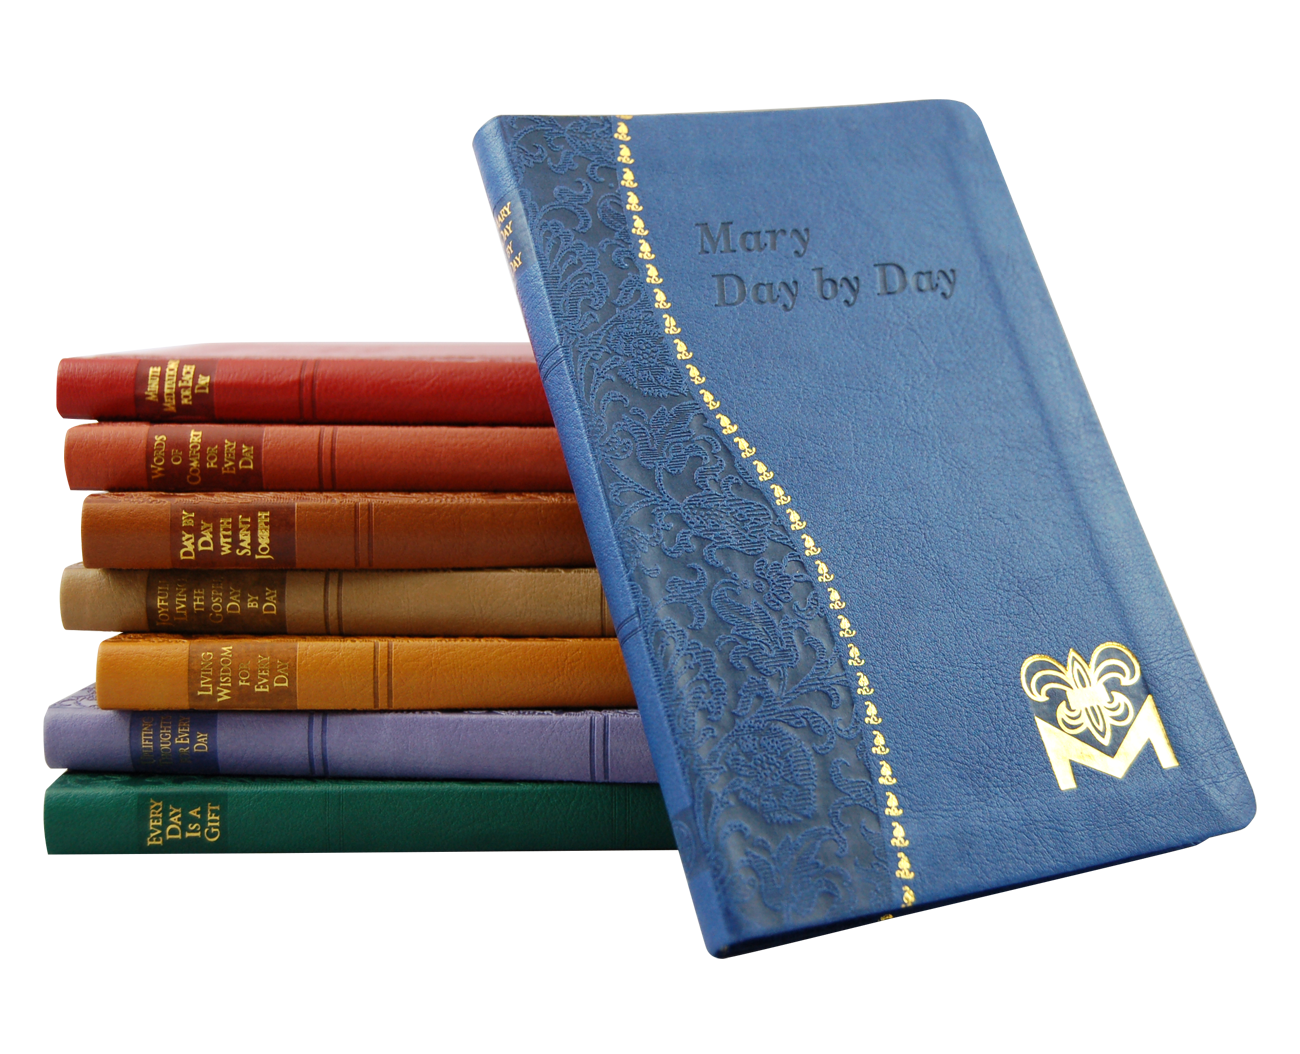 spiritual life series by catholic book publishing